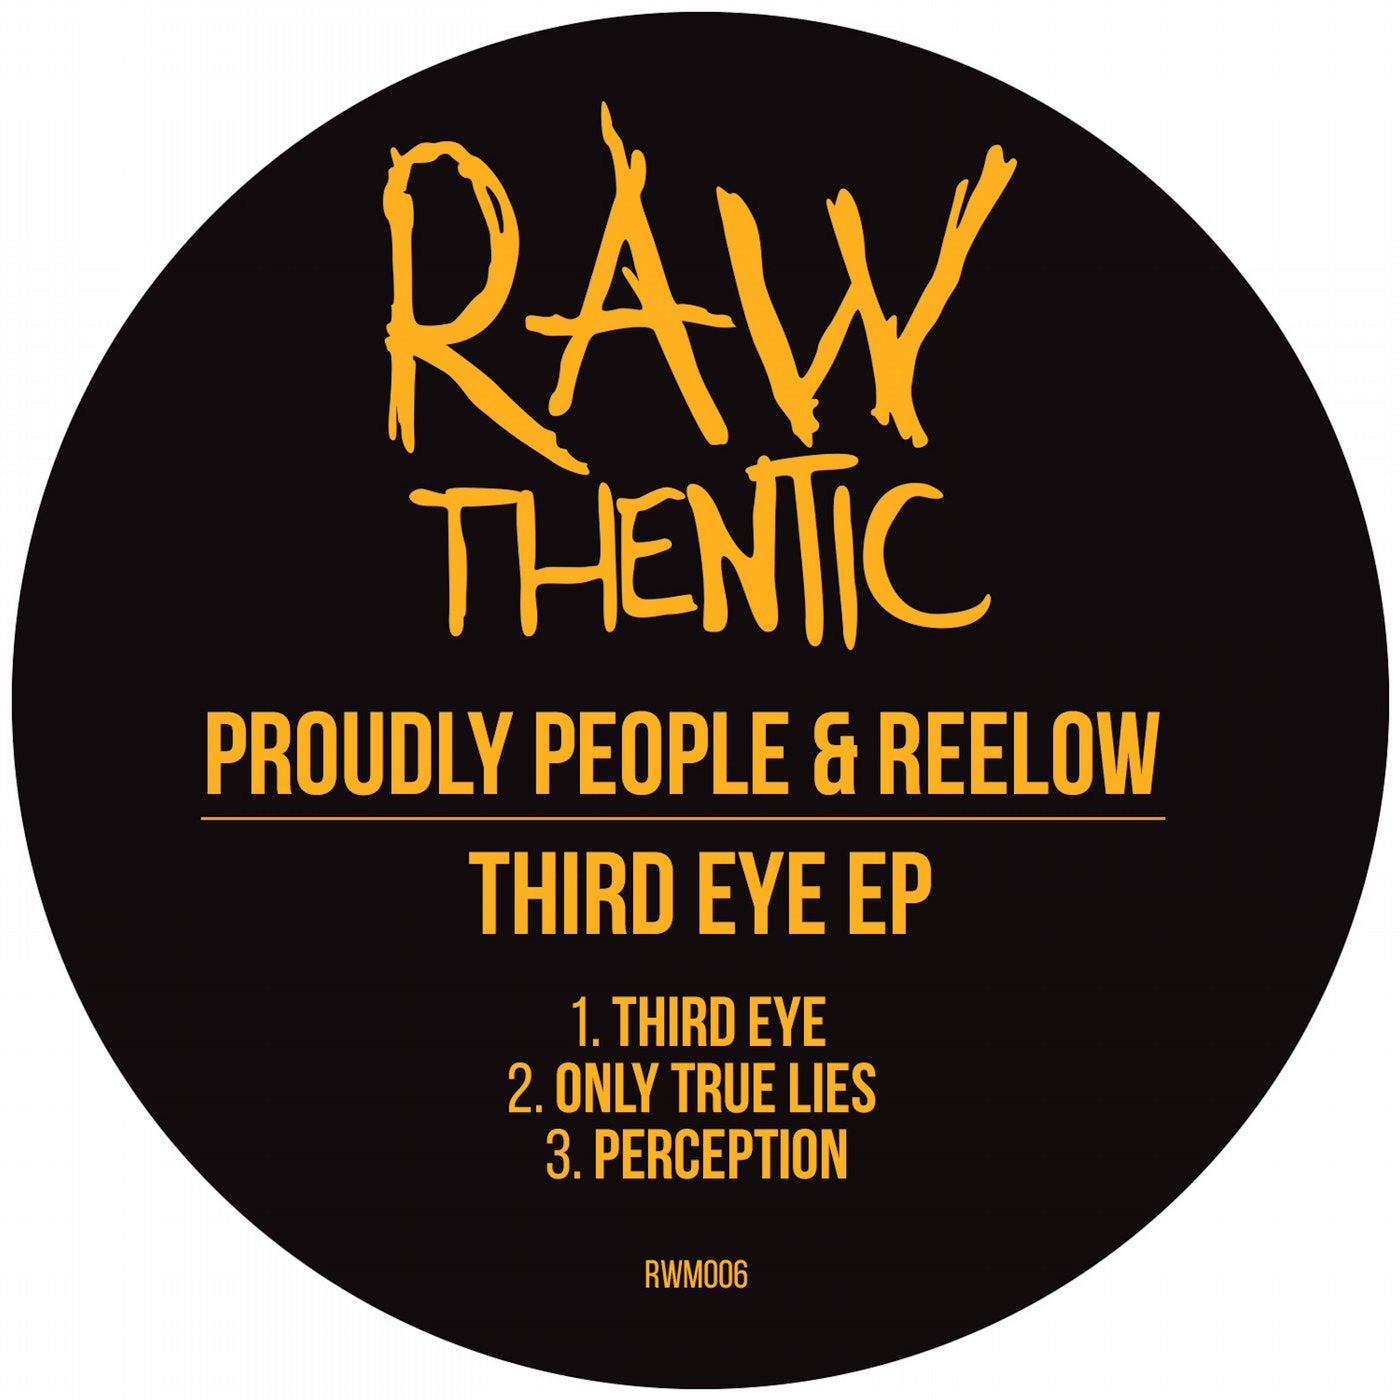 Third Eye EP